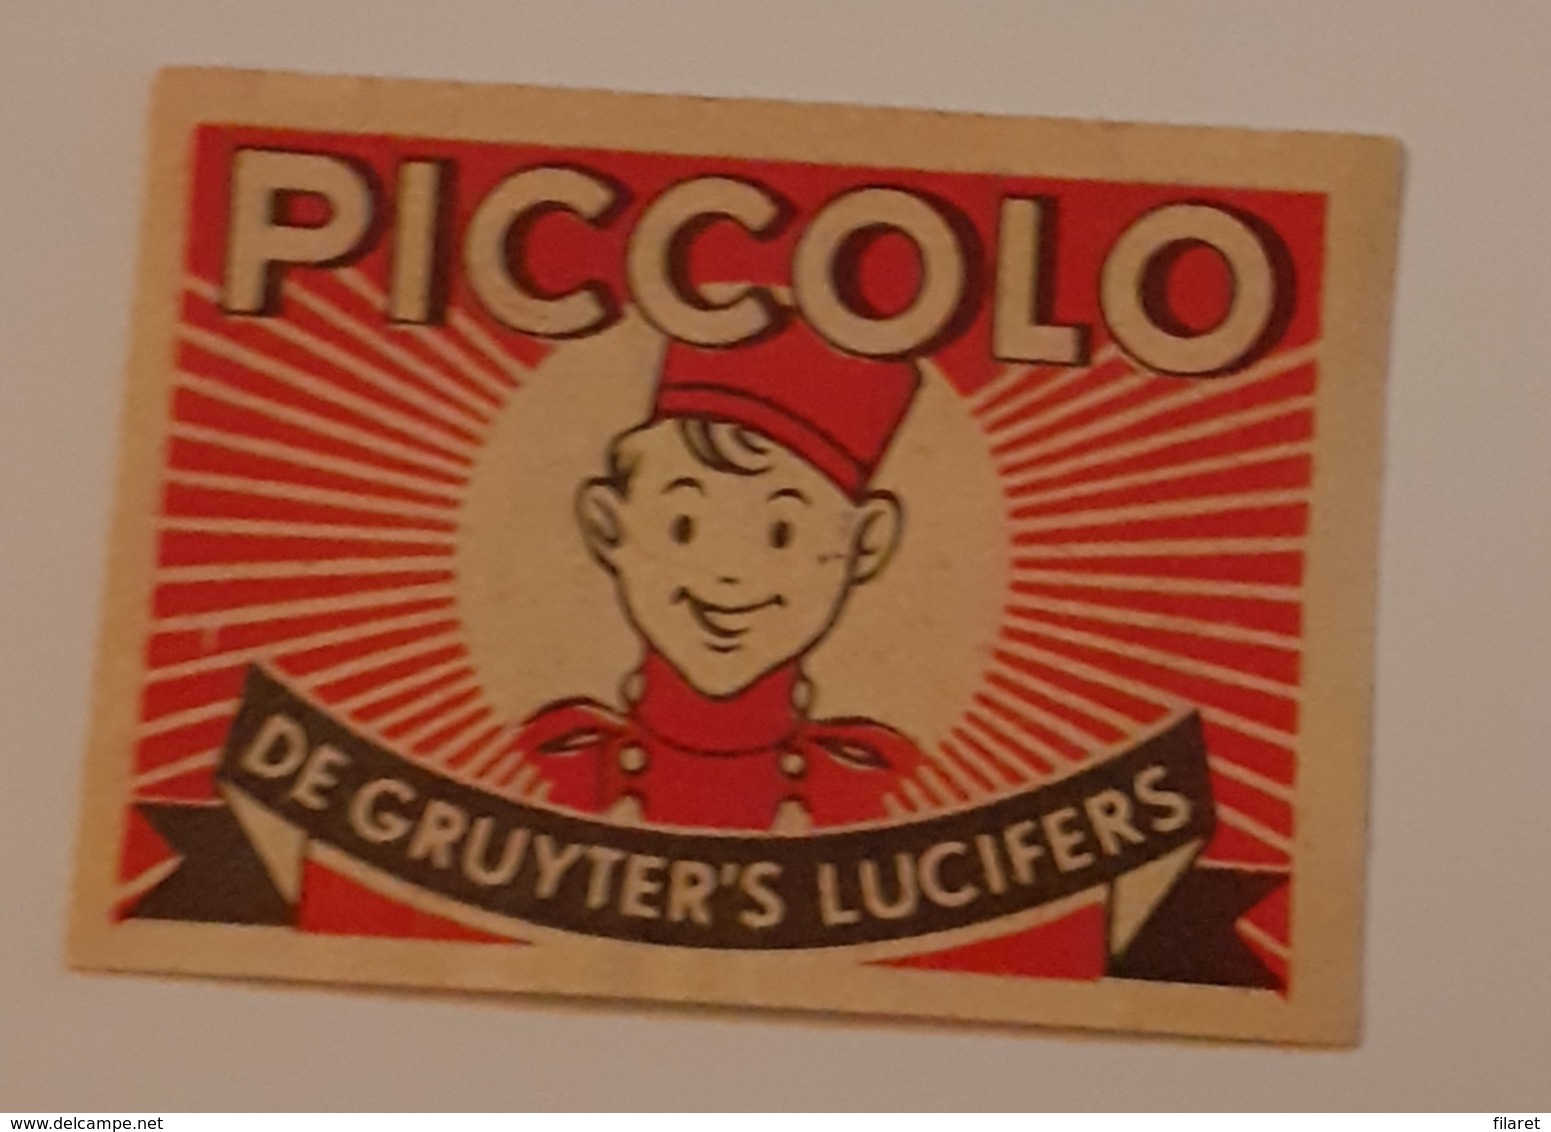 PICCOLO - Matchbox Labels